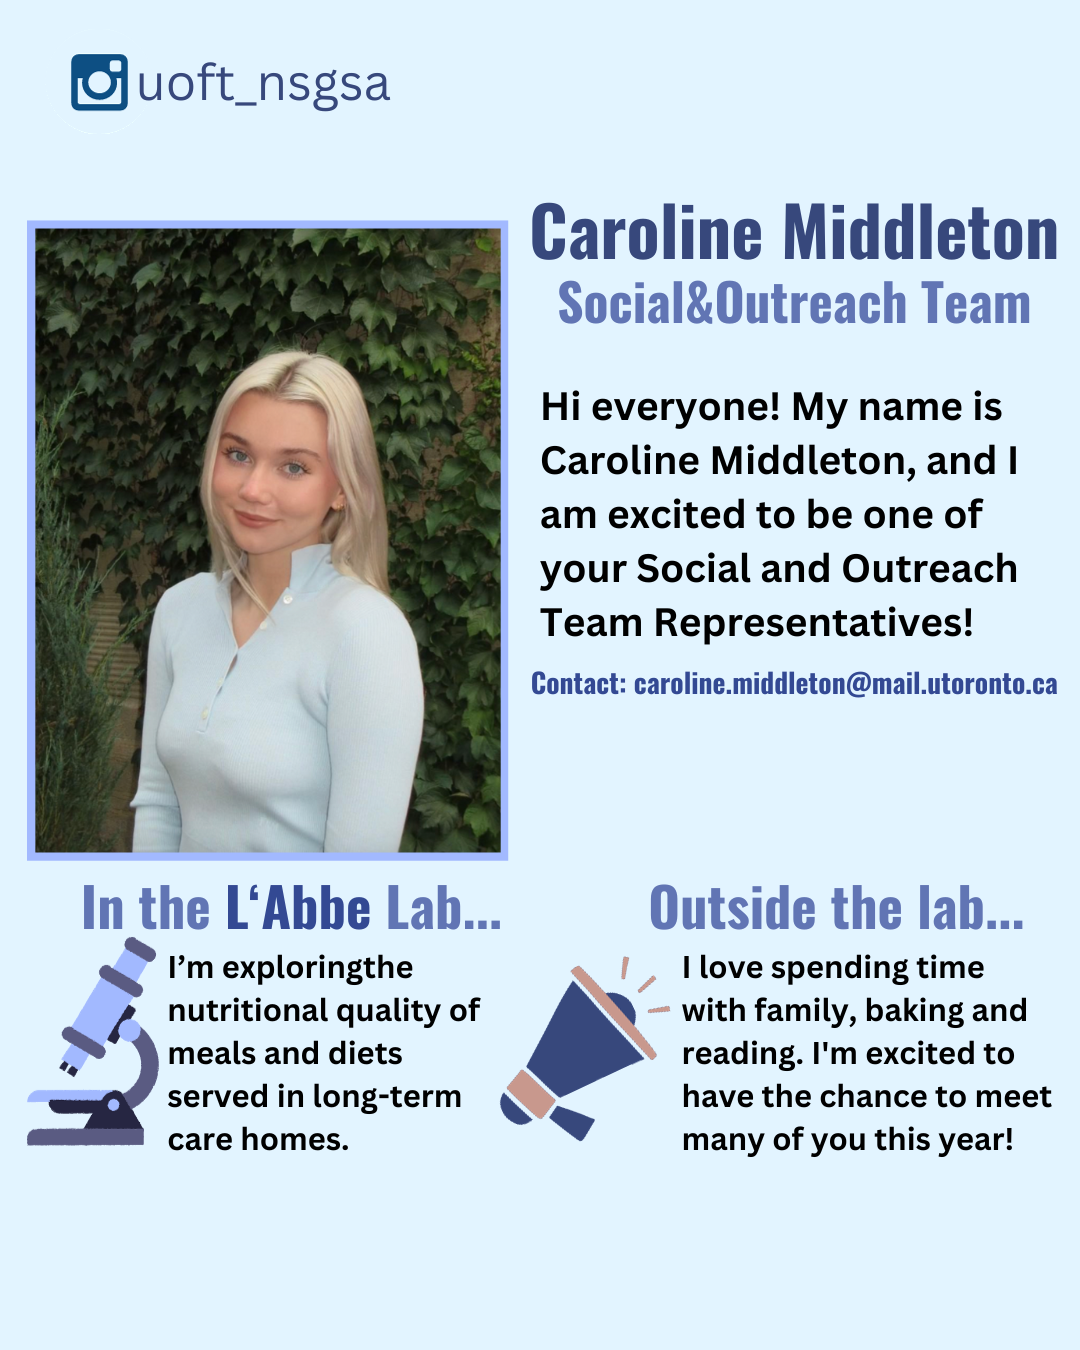 Caroline Middleton, Social & Outreach Team